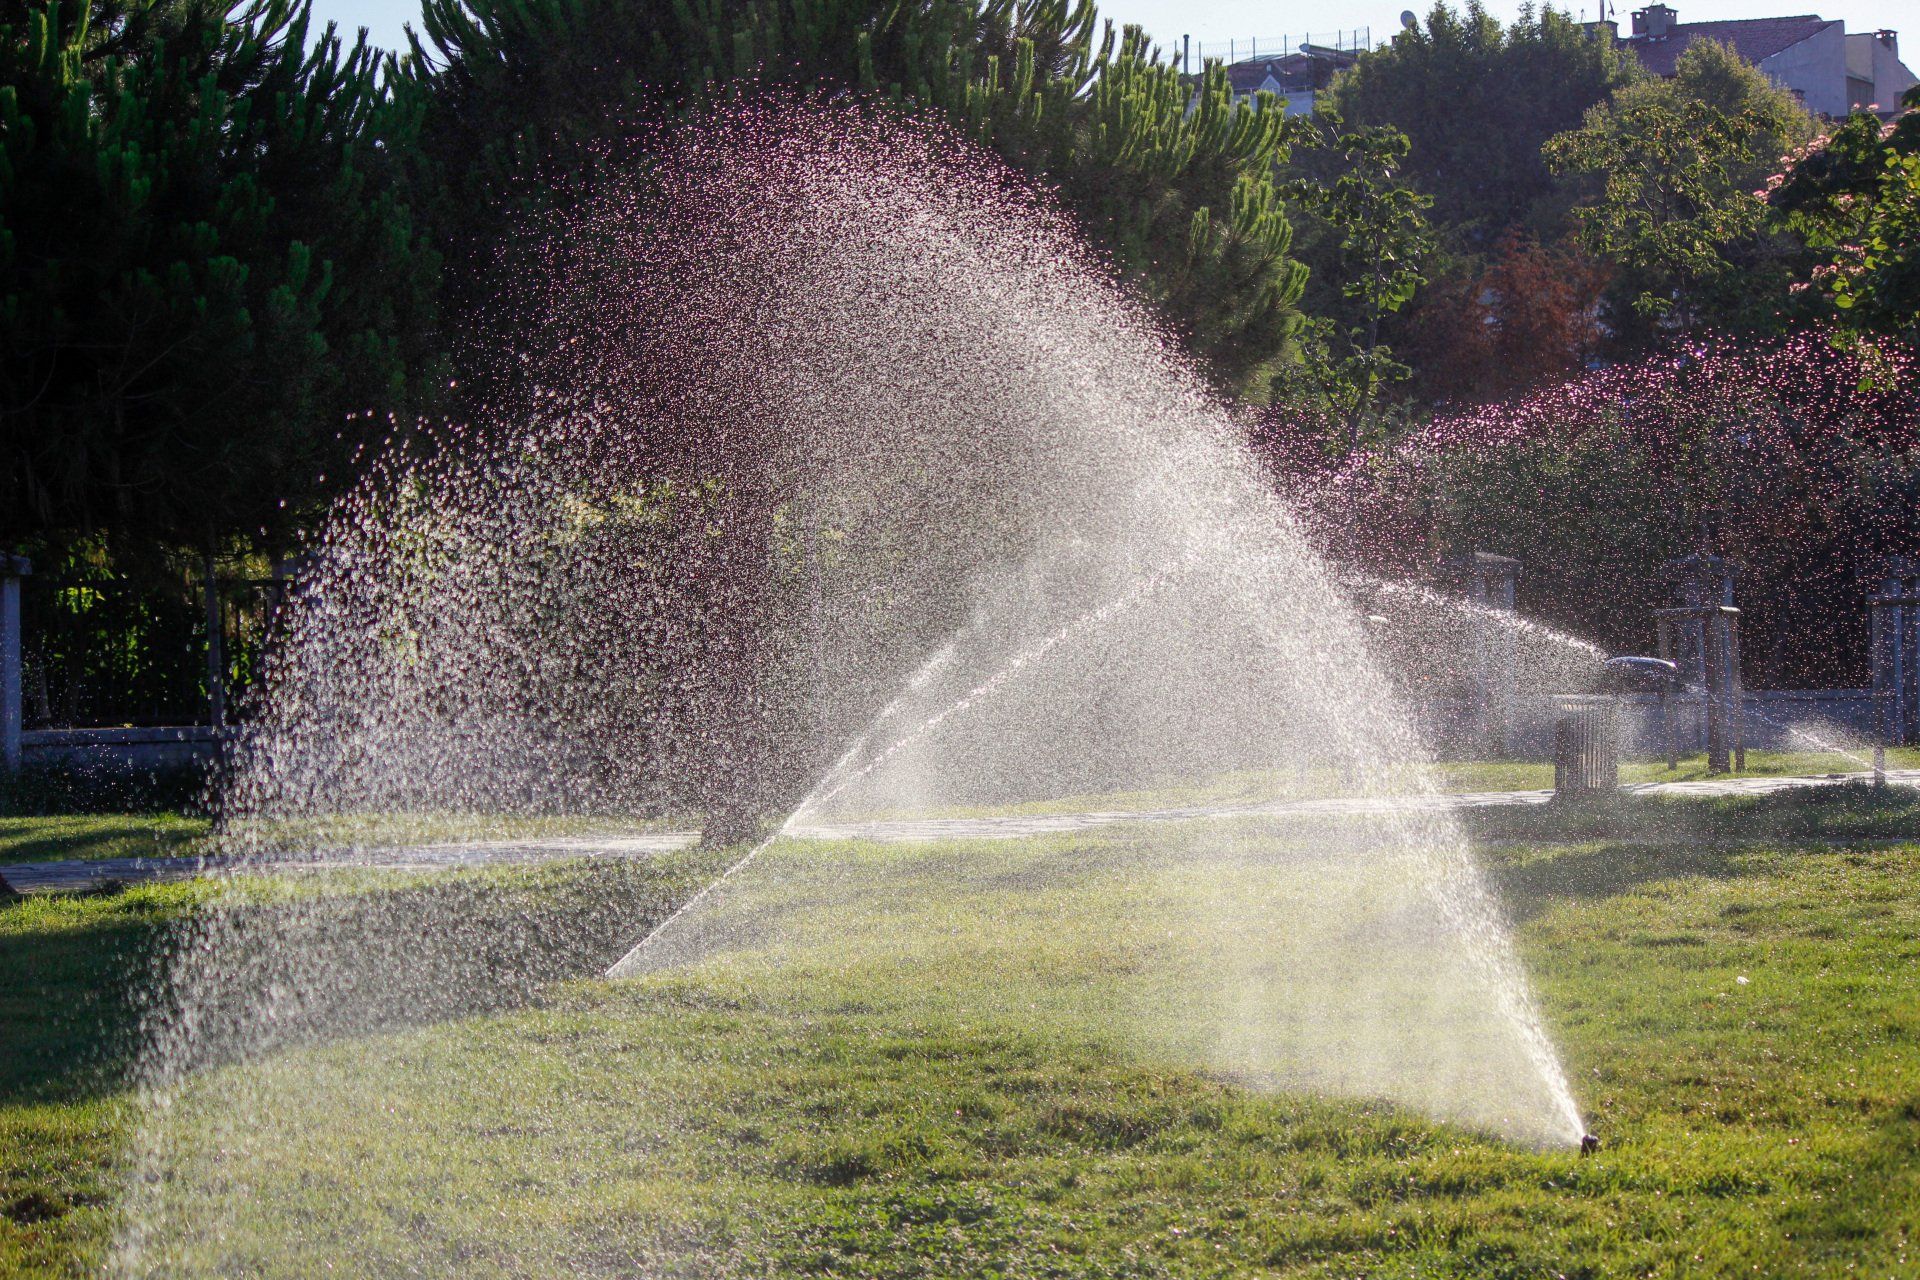 Irrigation sprinkler system watering grass